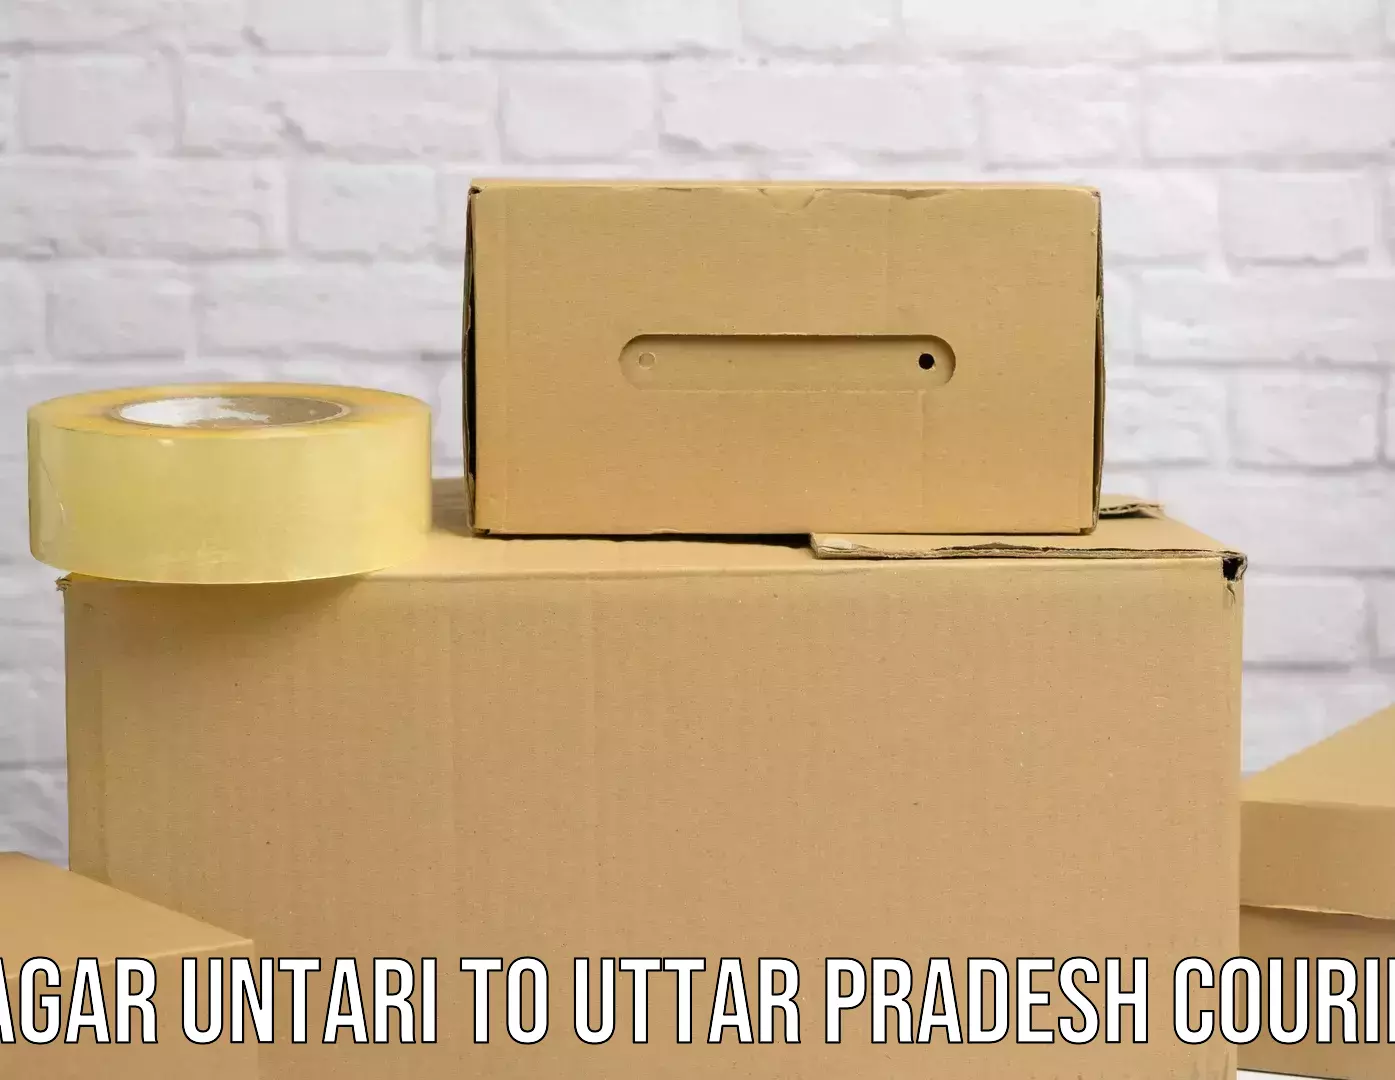 Professional courier handling Nagar Untari to Uttar Pradesh